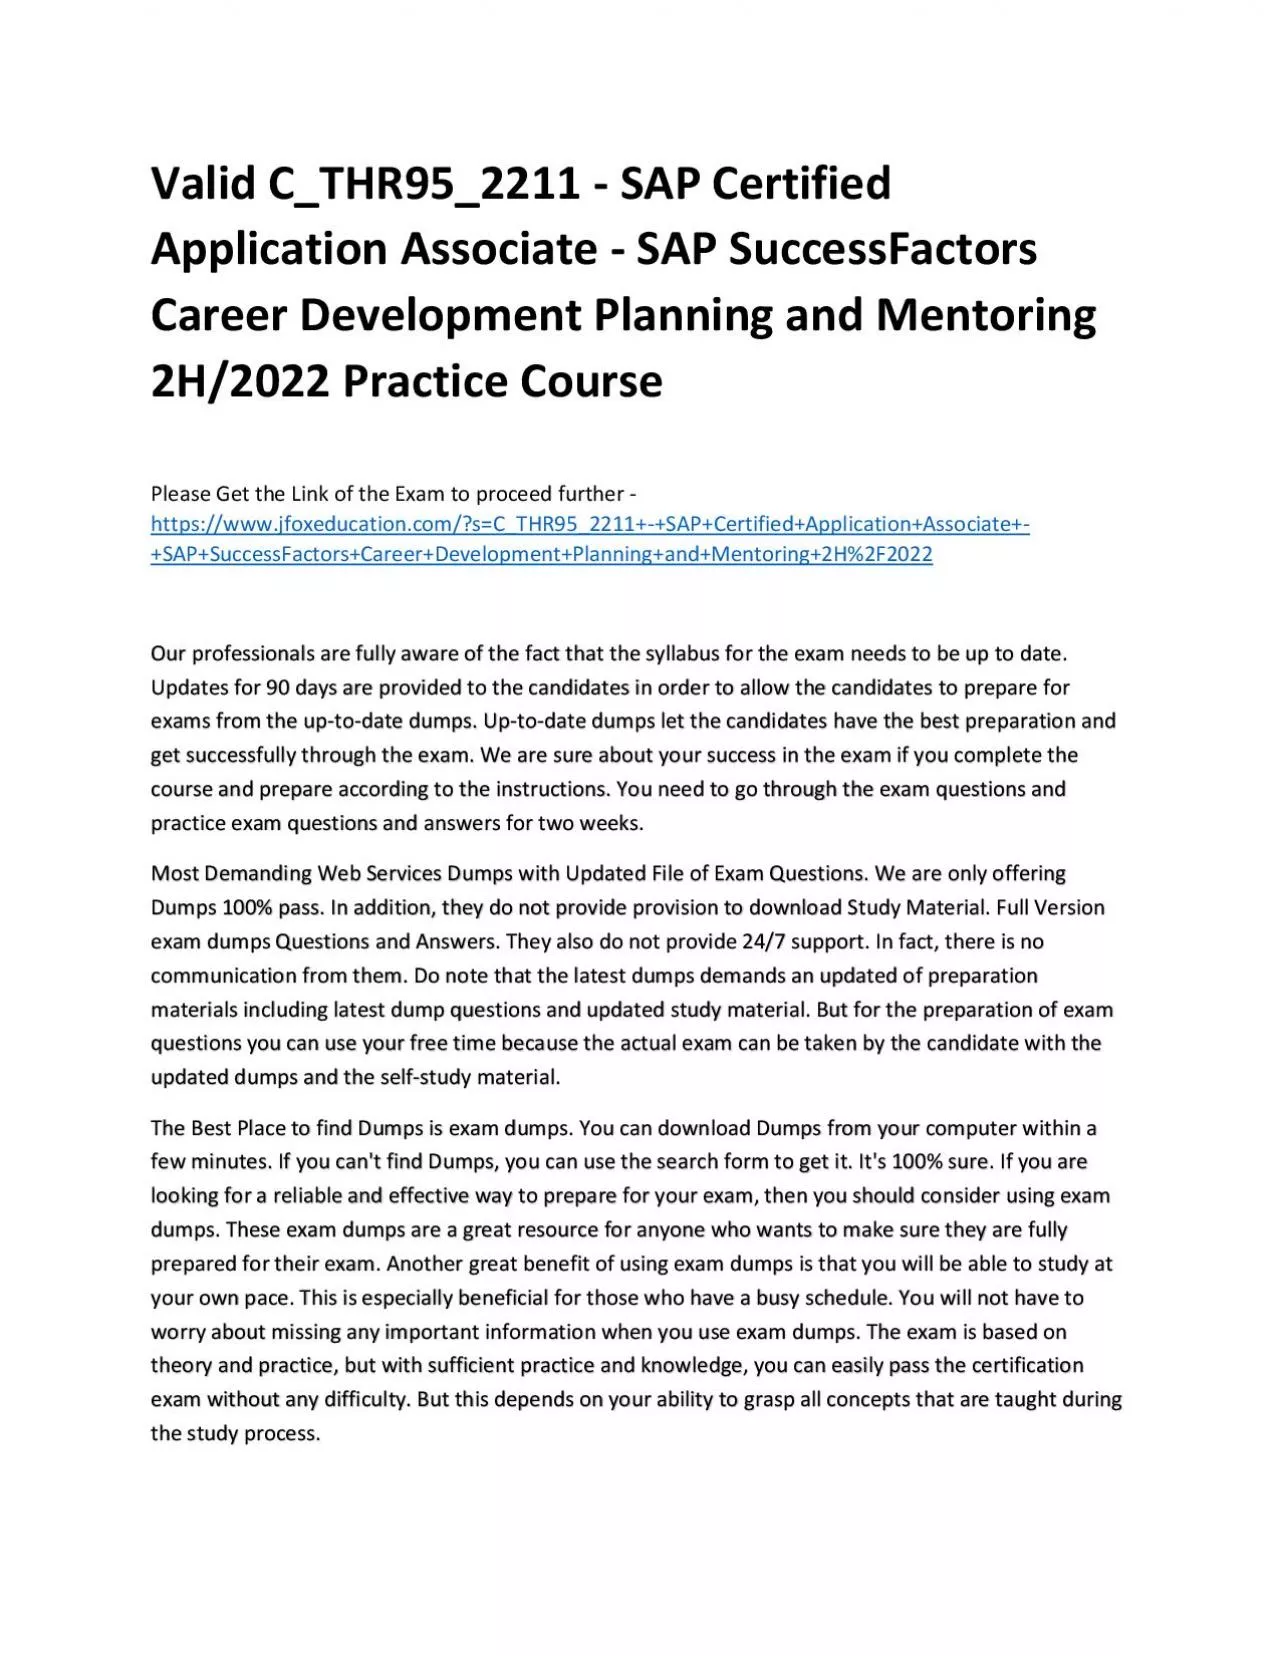 Valid C_THR95_2211 - SAP Certified Application Associate - SAP SuccessFactors Career Development